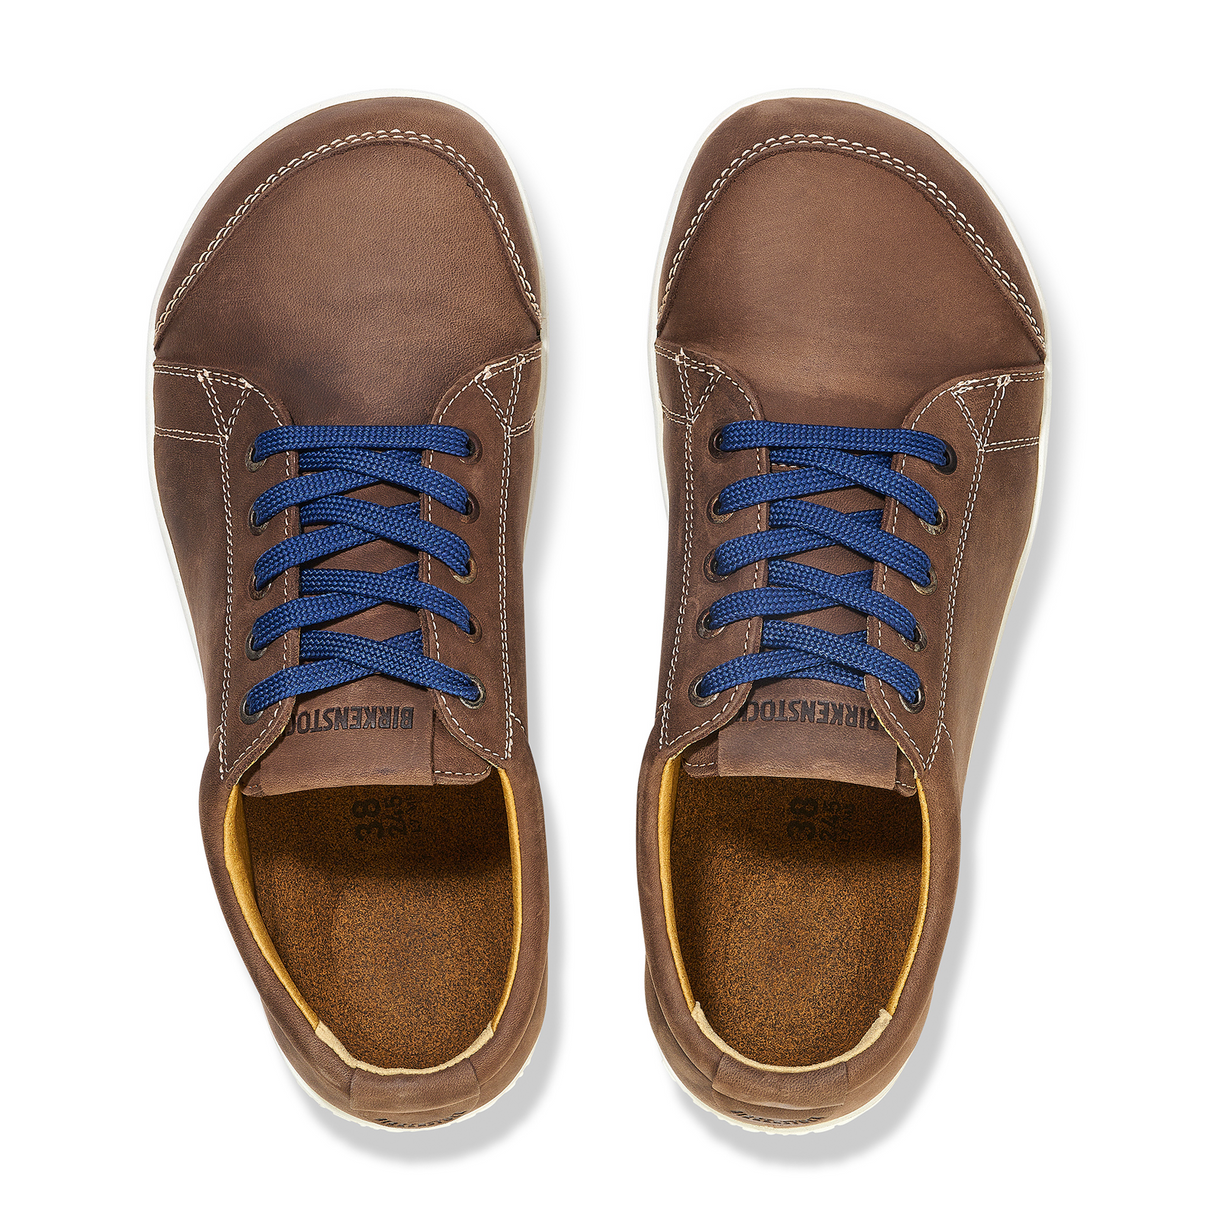 Birkenstock QS500 Steel Toe (Men) - Brown Nubuck Leather Boots - Work - Low - Steel Toe - The Heel Shoe Fitters